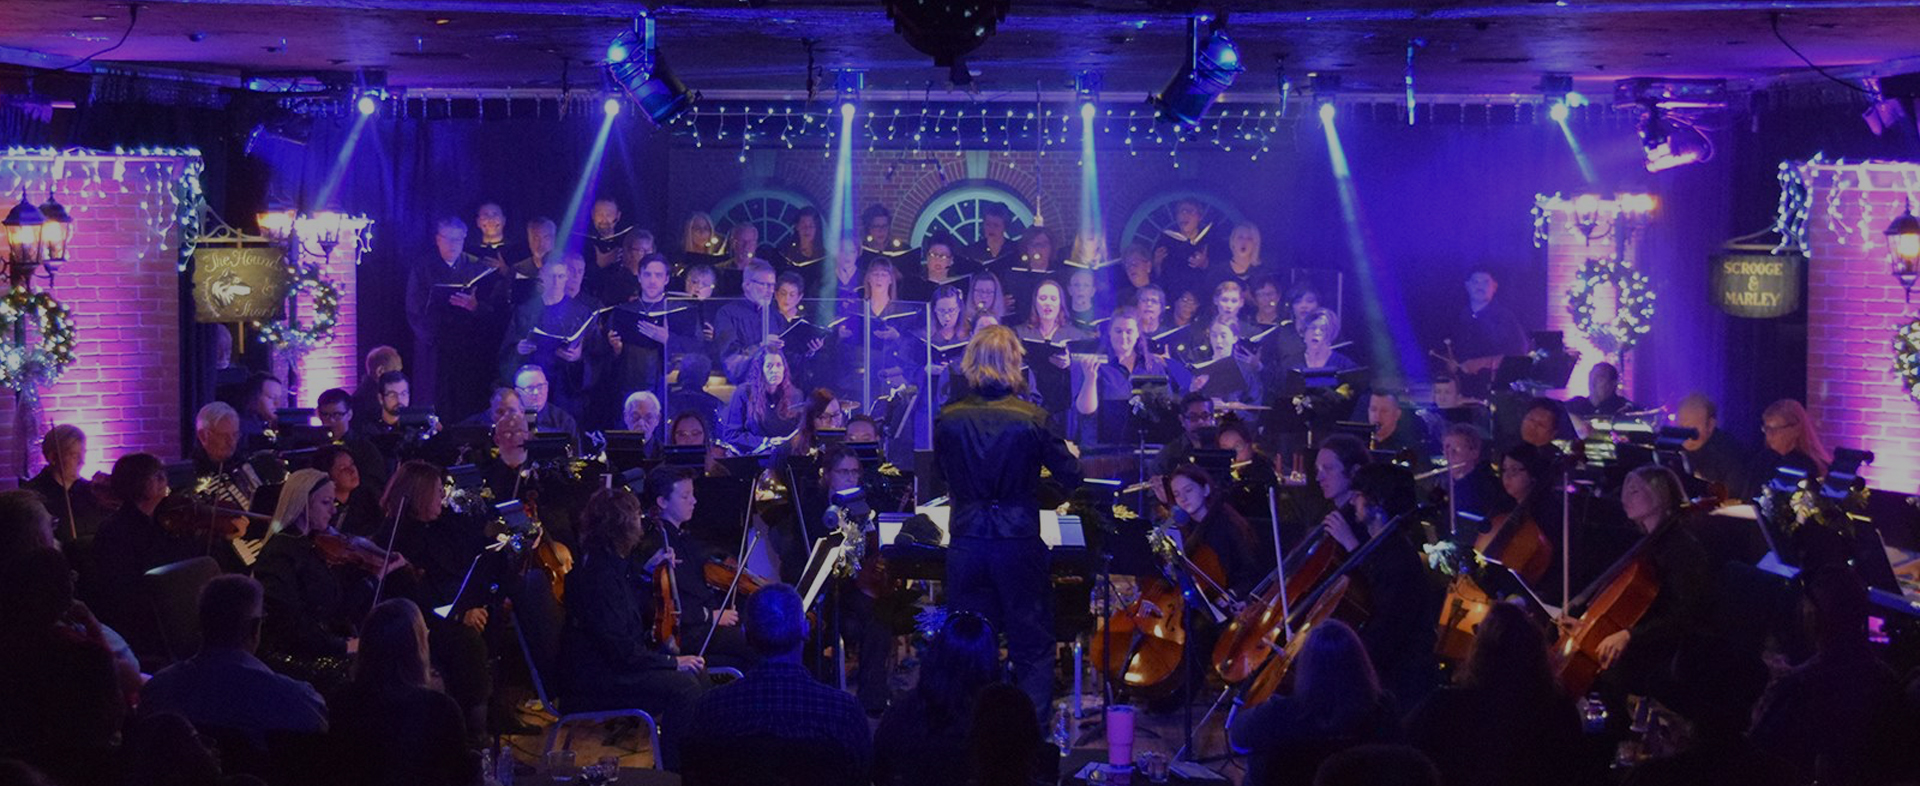 Mannheim Steamroller sponsors Joshua Tree Philharmonic this Christmas Season